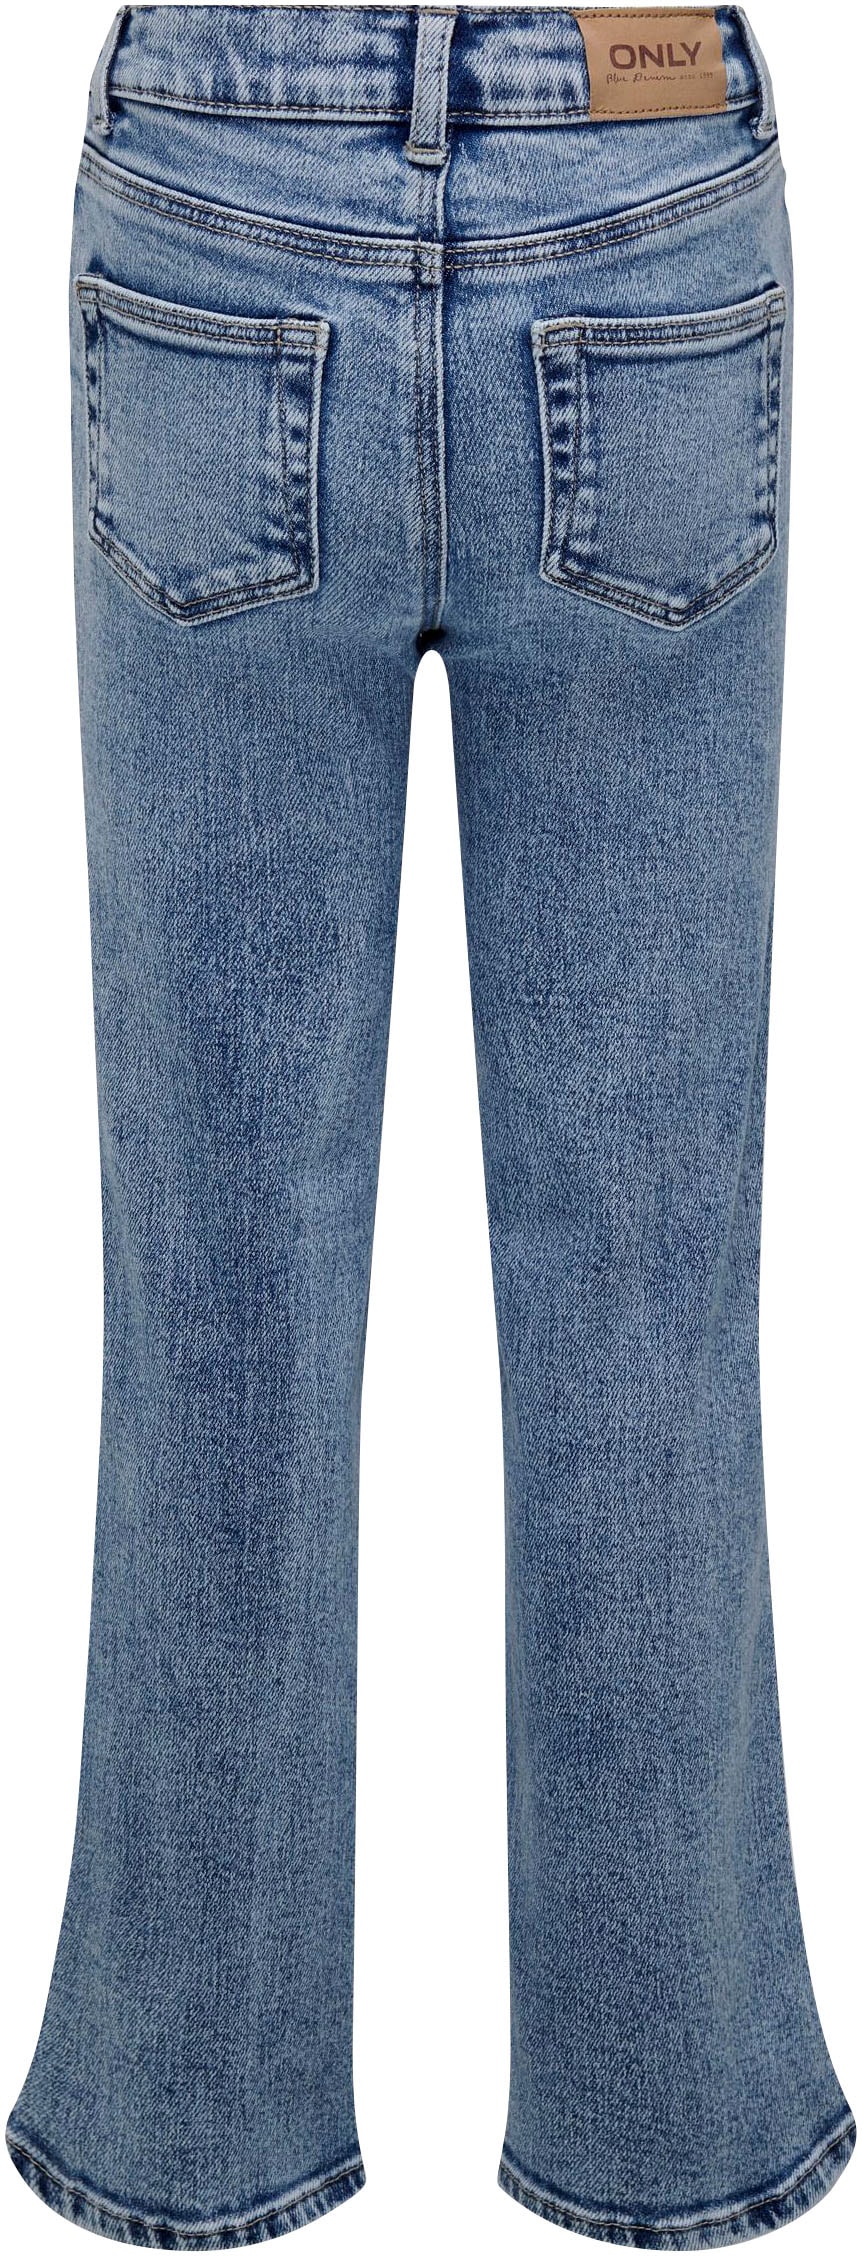 WIDE 5-Pocket-Jeans DEST LEG ONLY kaufen KIDS DN« »KOGJUICY